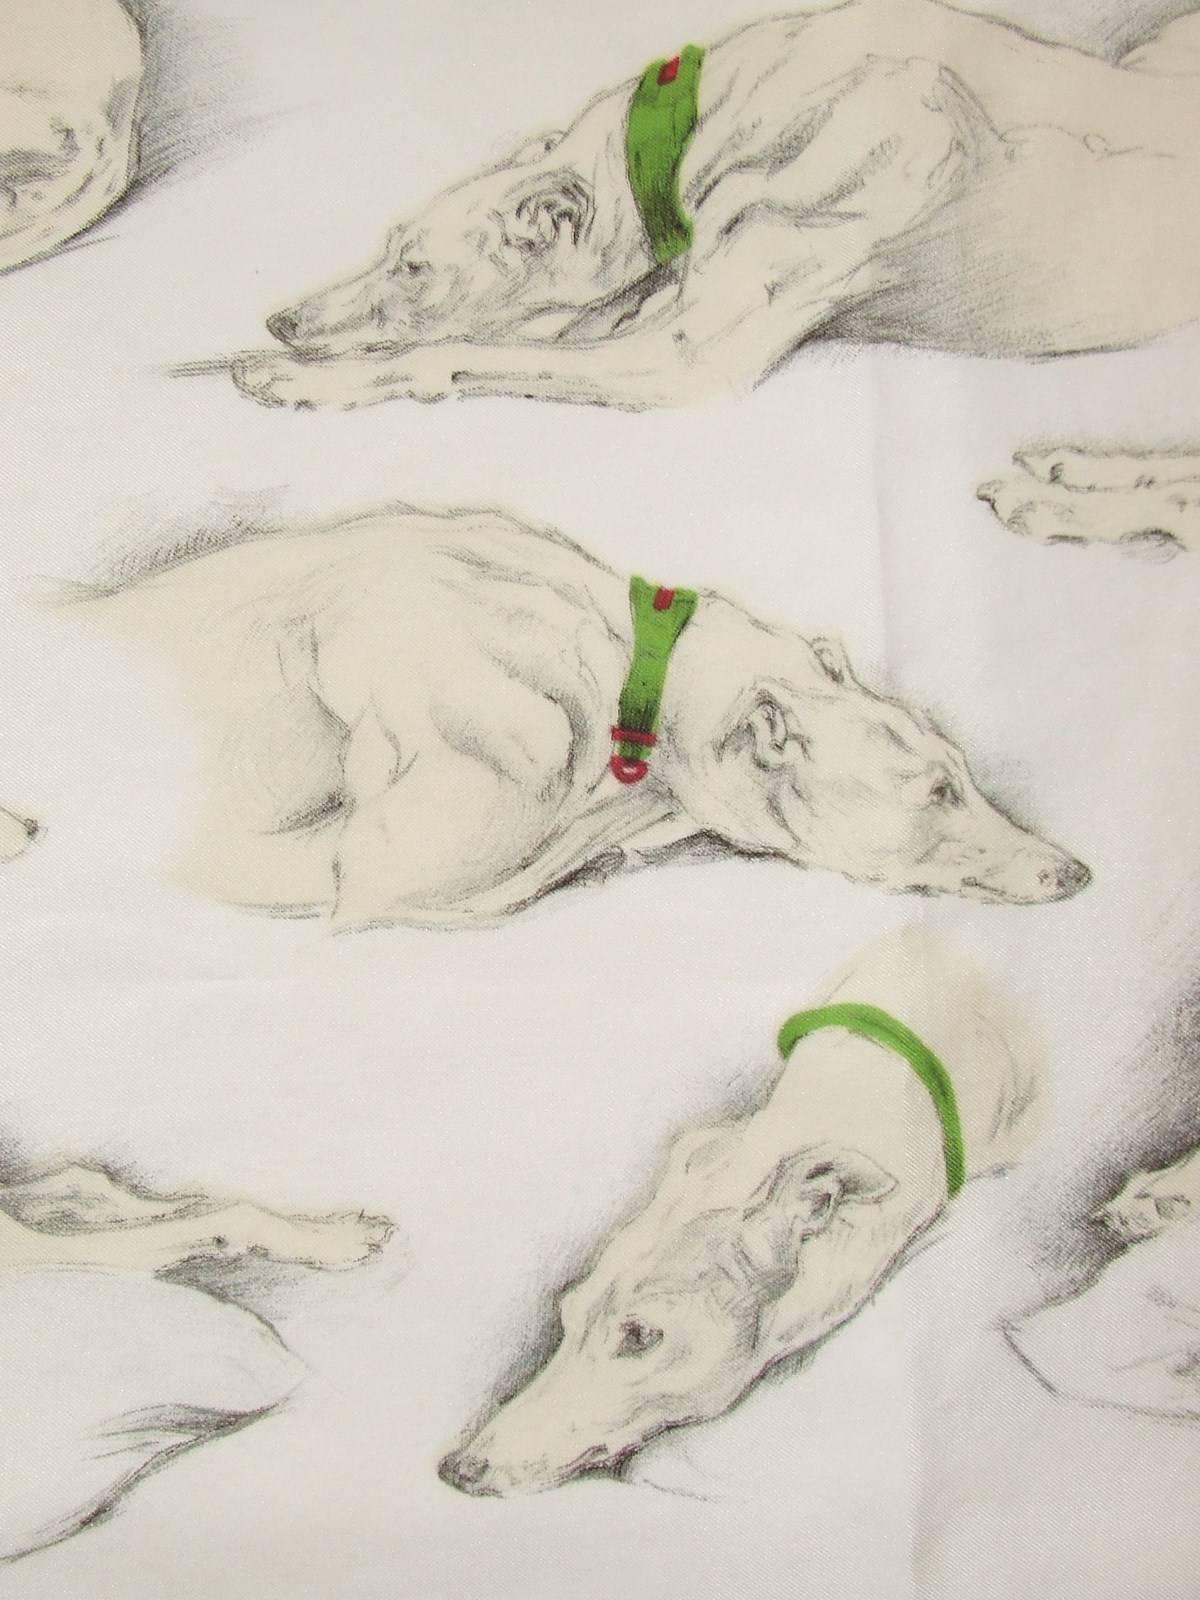 hermes greyhound scarf